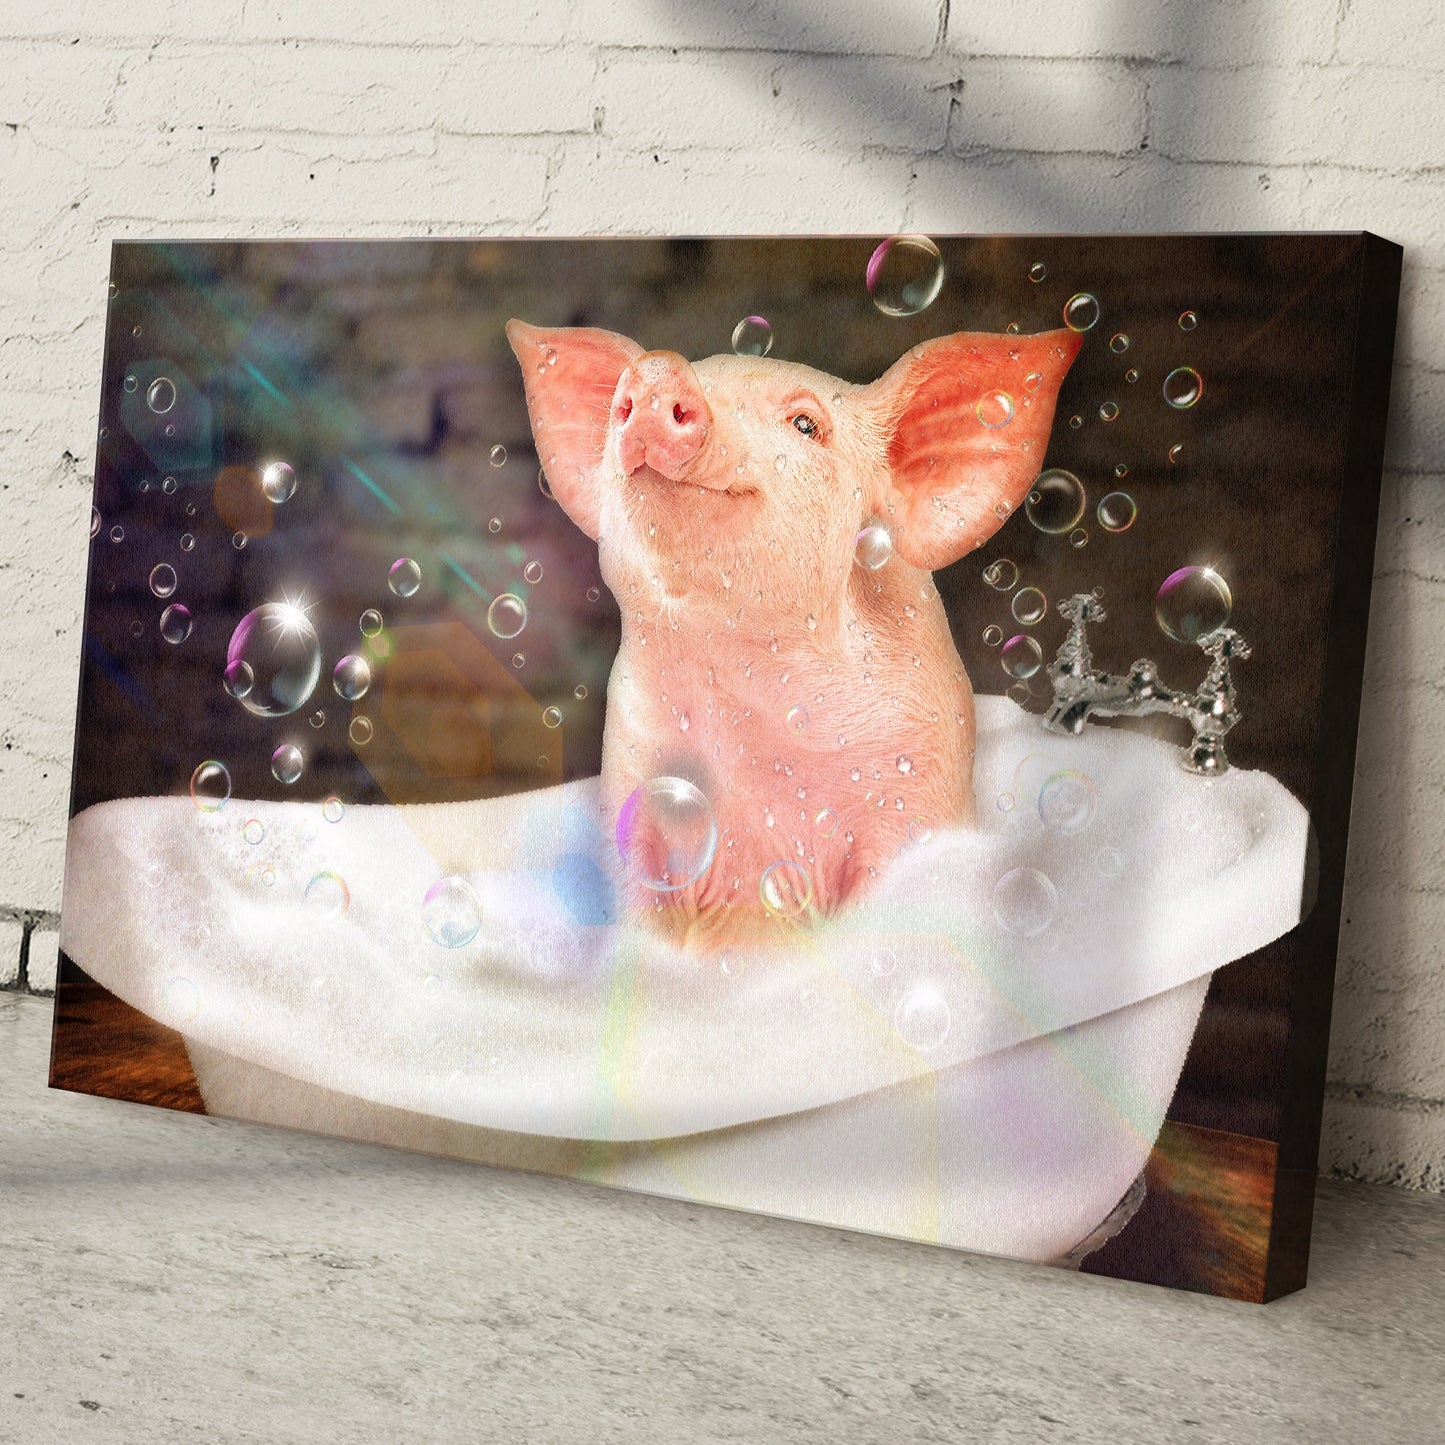 Spa Day Serenity  Bubble Bath Pig in Tub Canvas Wall Art